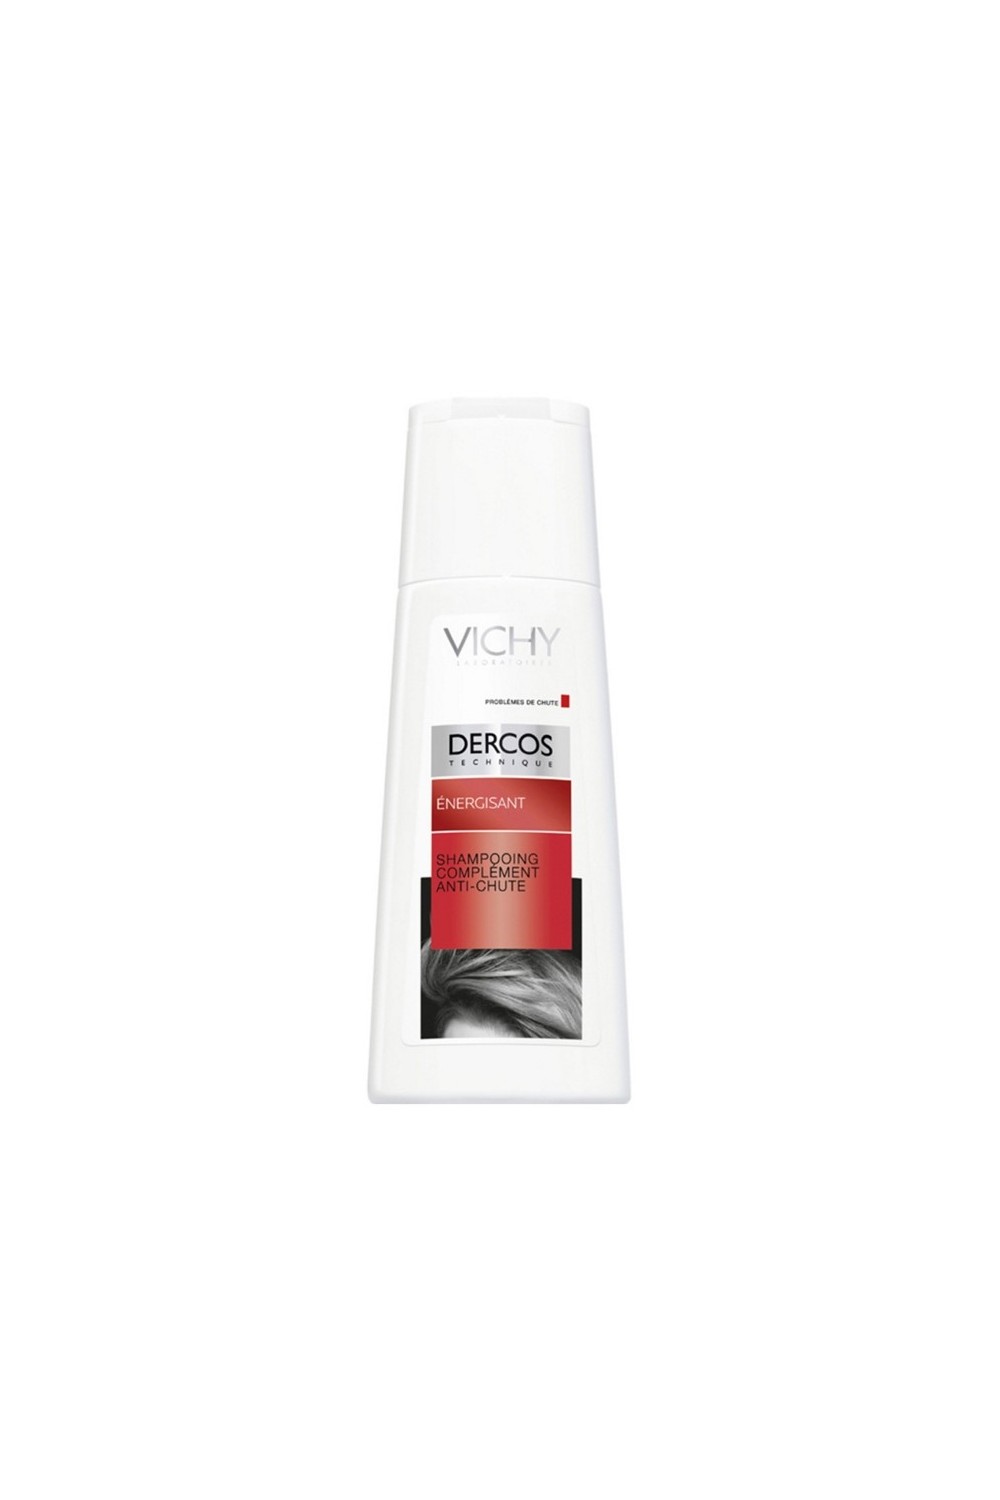 Vichy Dercos Energising Shampoo 400ml